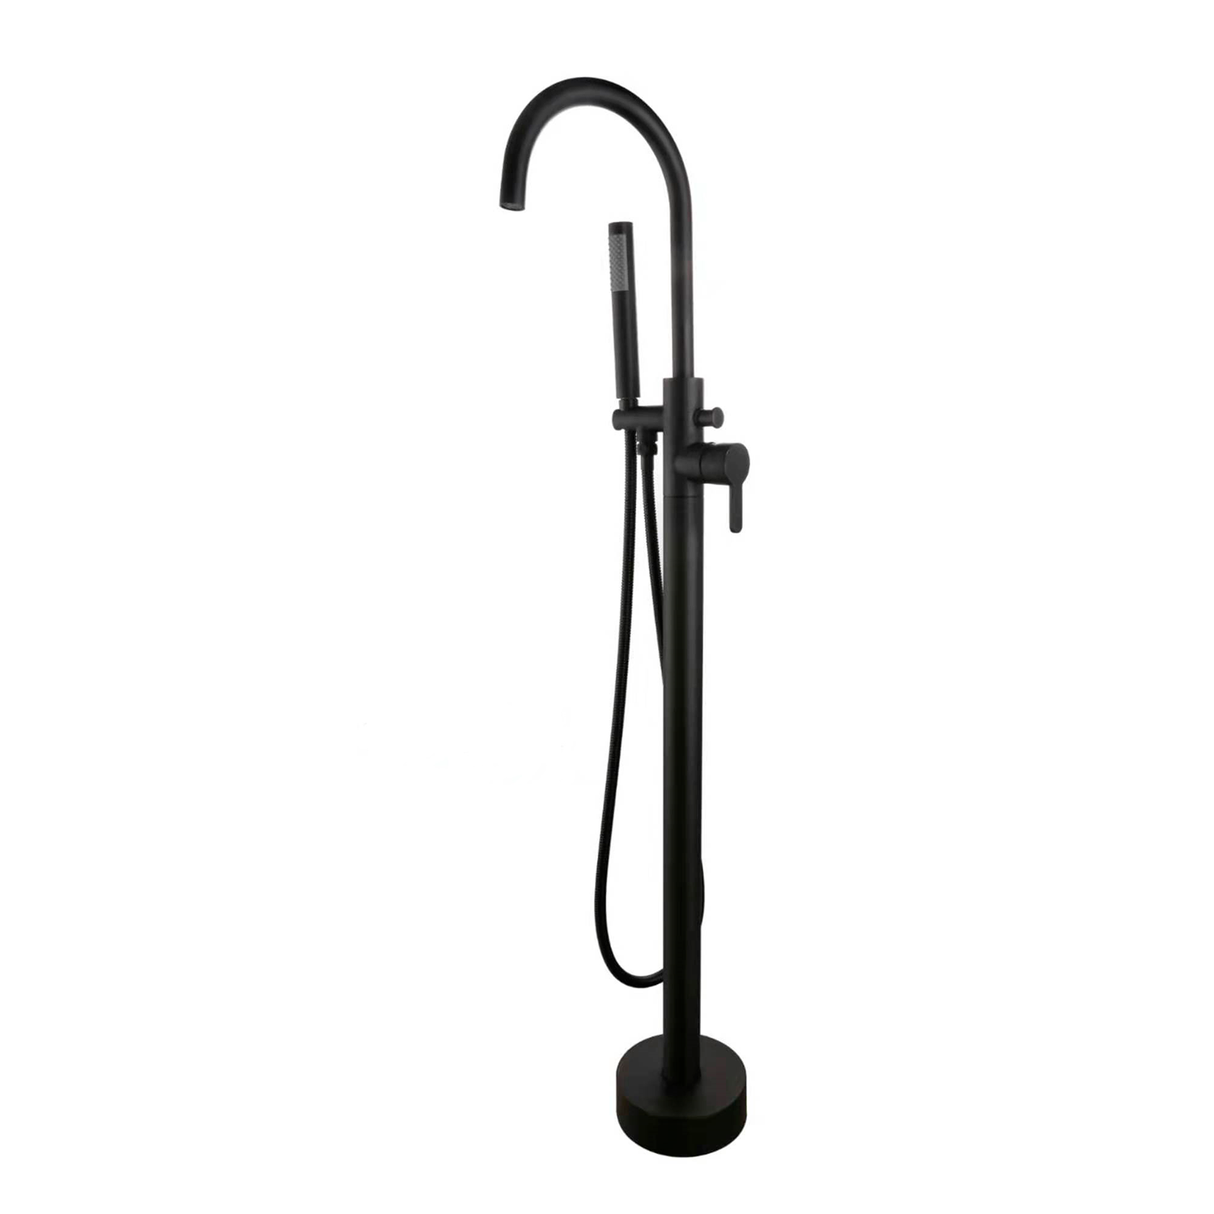 DAX Brass Freestanding Tub Filler with Hand Shower and Gooseneck Spout, Matte Black DAX-8823-BL